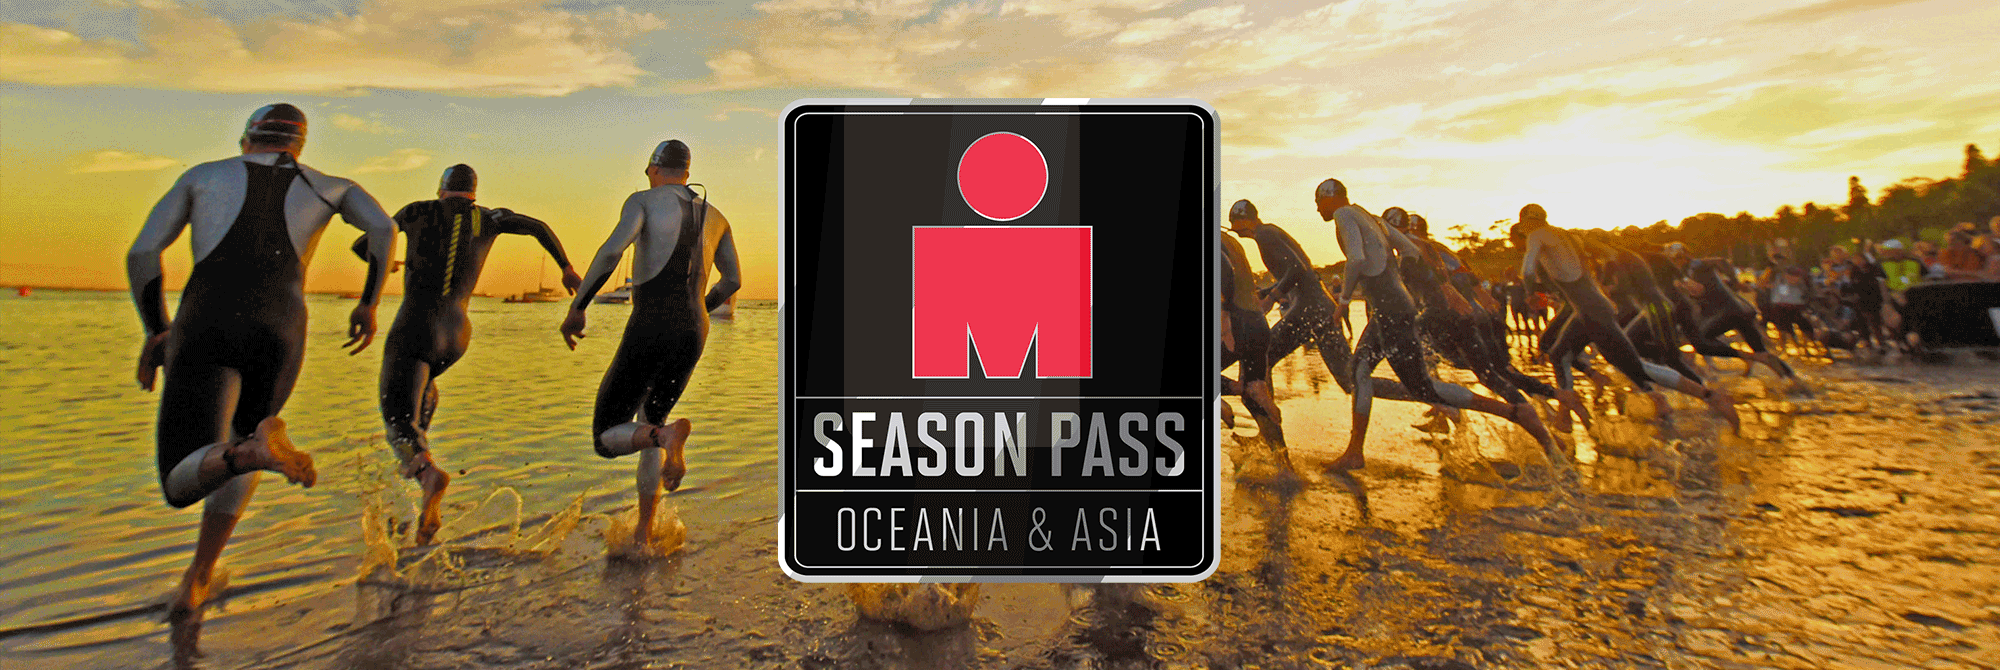 Season Pass - Oceania & Asia